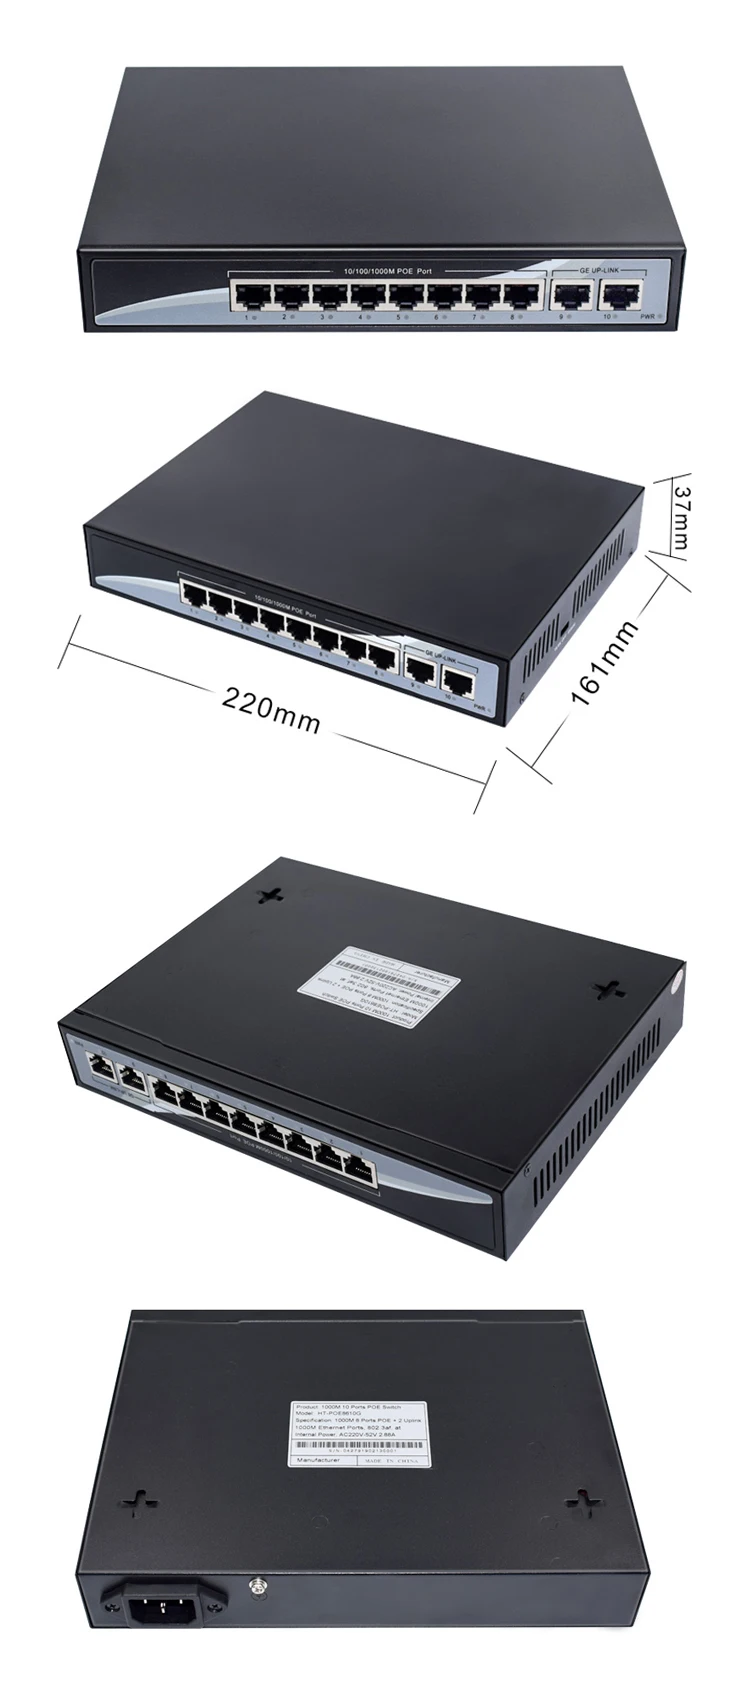 Tp Link Wall Mounted 8 Ports 10/100/1000Mbps Ethernet PoE Switch Desktop Unmanaged Network Gigabit PoE Switch with 2 Uplink port